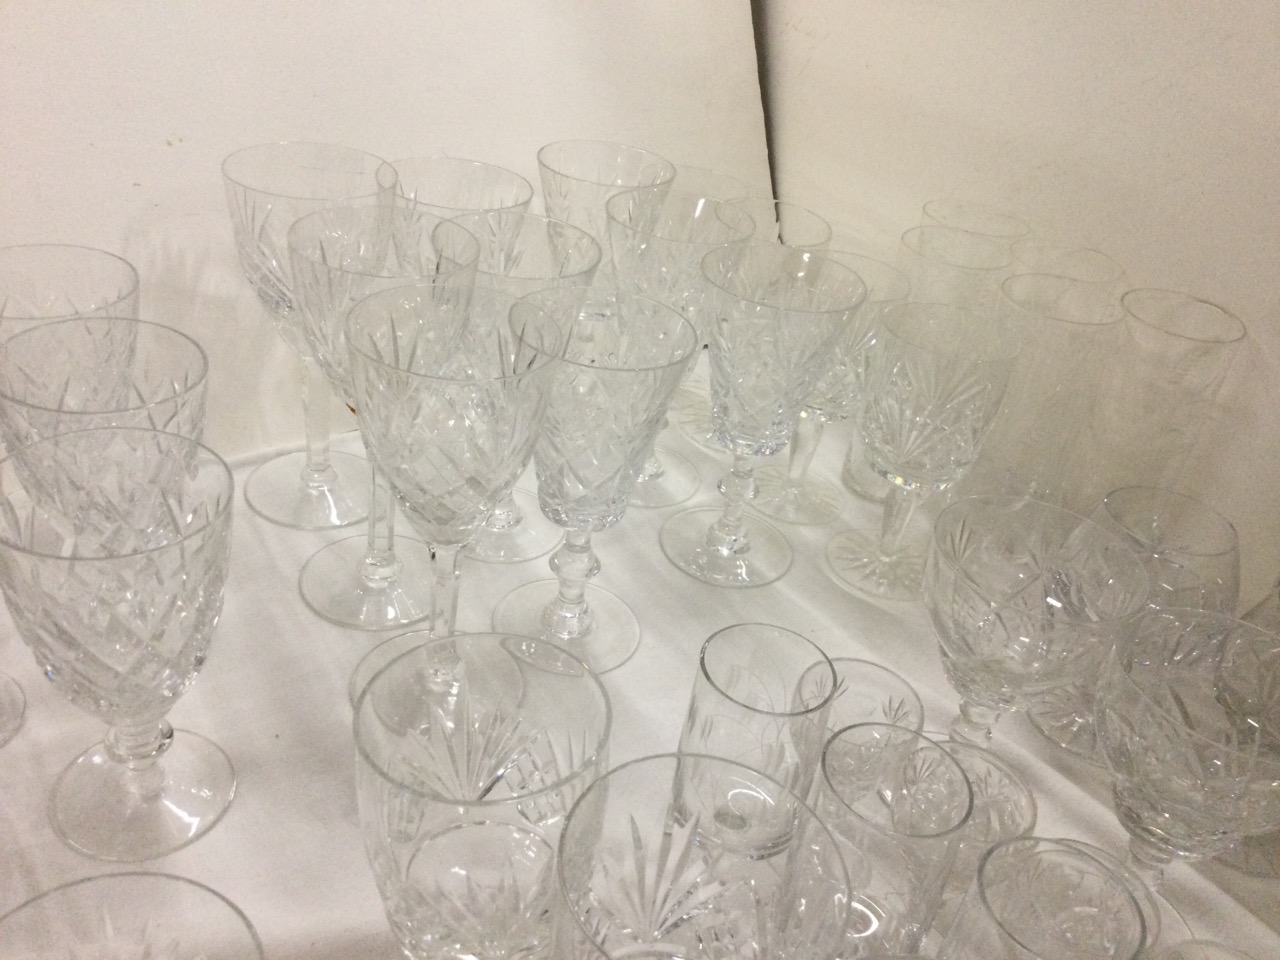 A quantity of drinking glasses - Edinburgh cut crystal, tumblers, wine glasses, brandy balloons, - Bild 3 aus 4